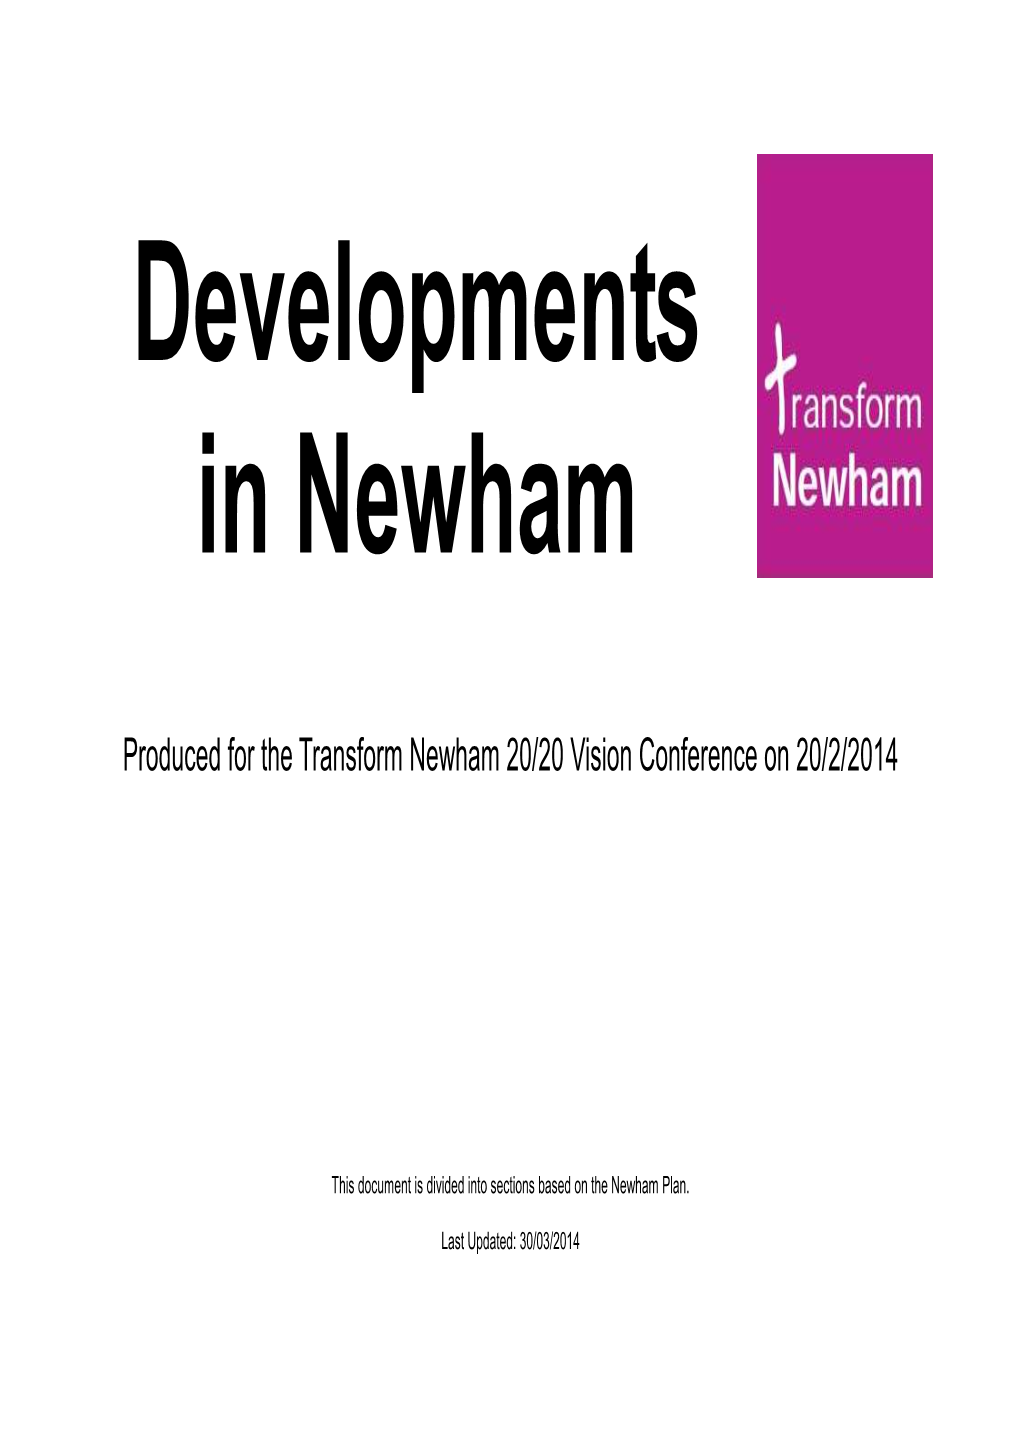 Developments in Newham